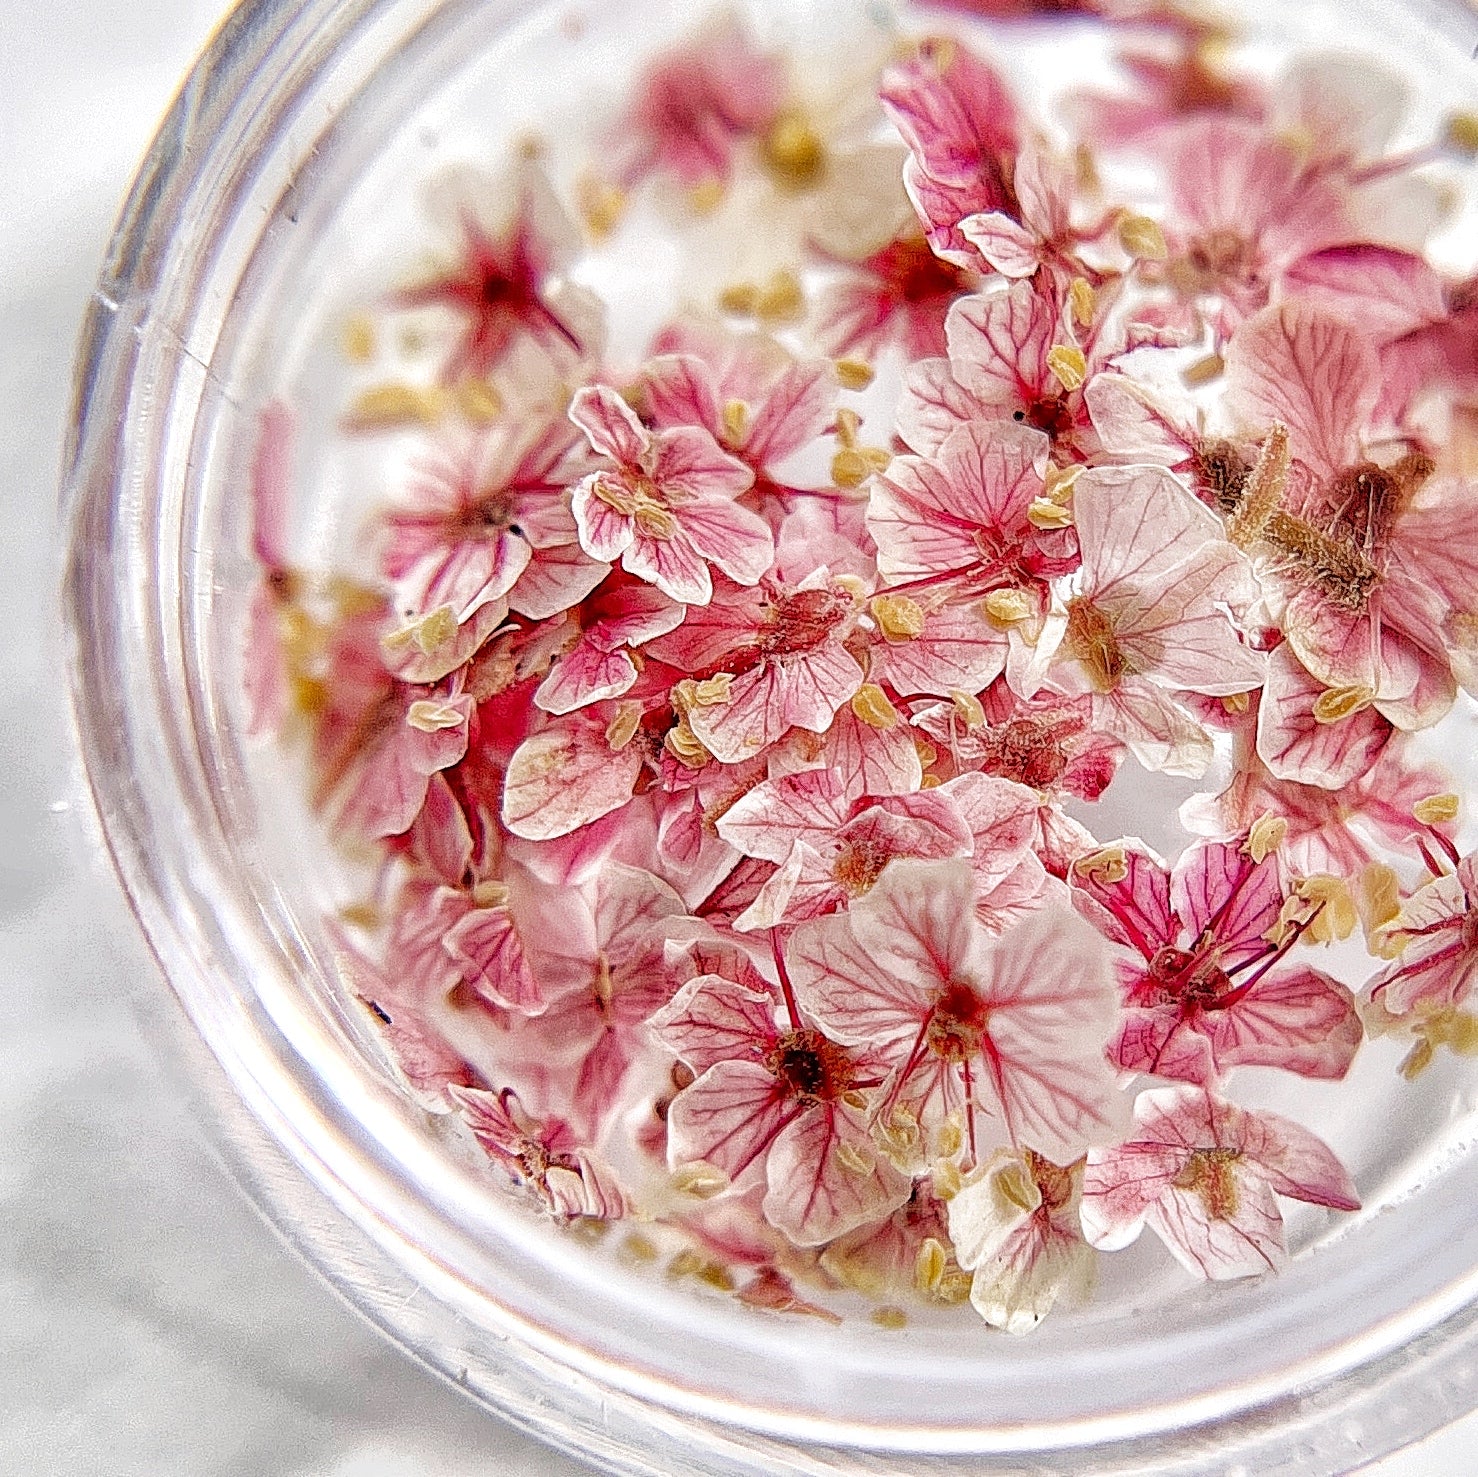 Petite Bloom in Raspberry - Multi-Tonal Deep Pink Pressed Flower Mix in Jar, Presented on White Background.